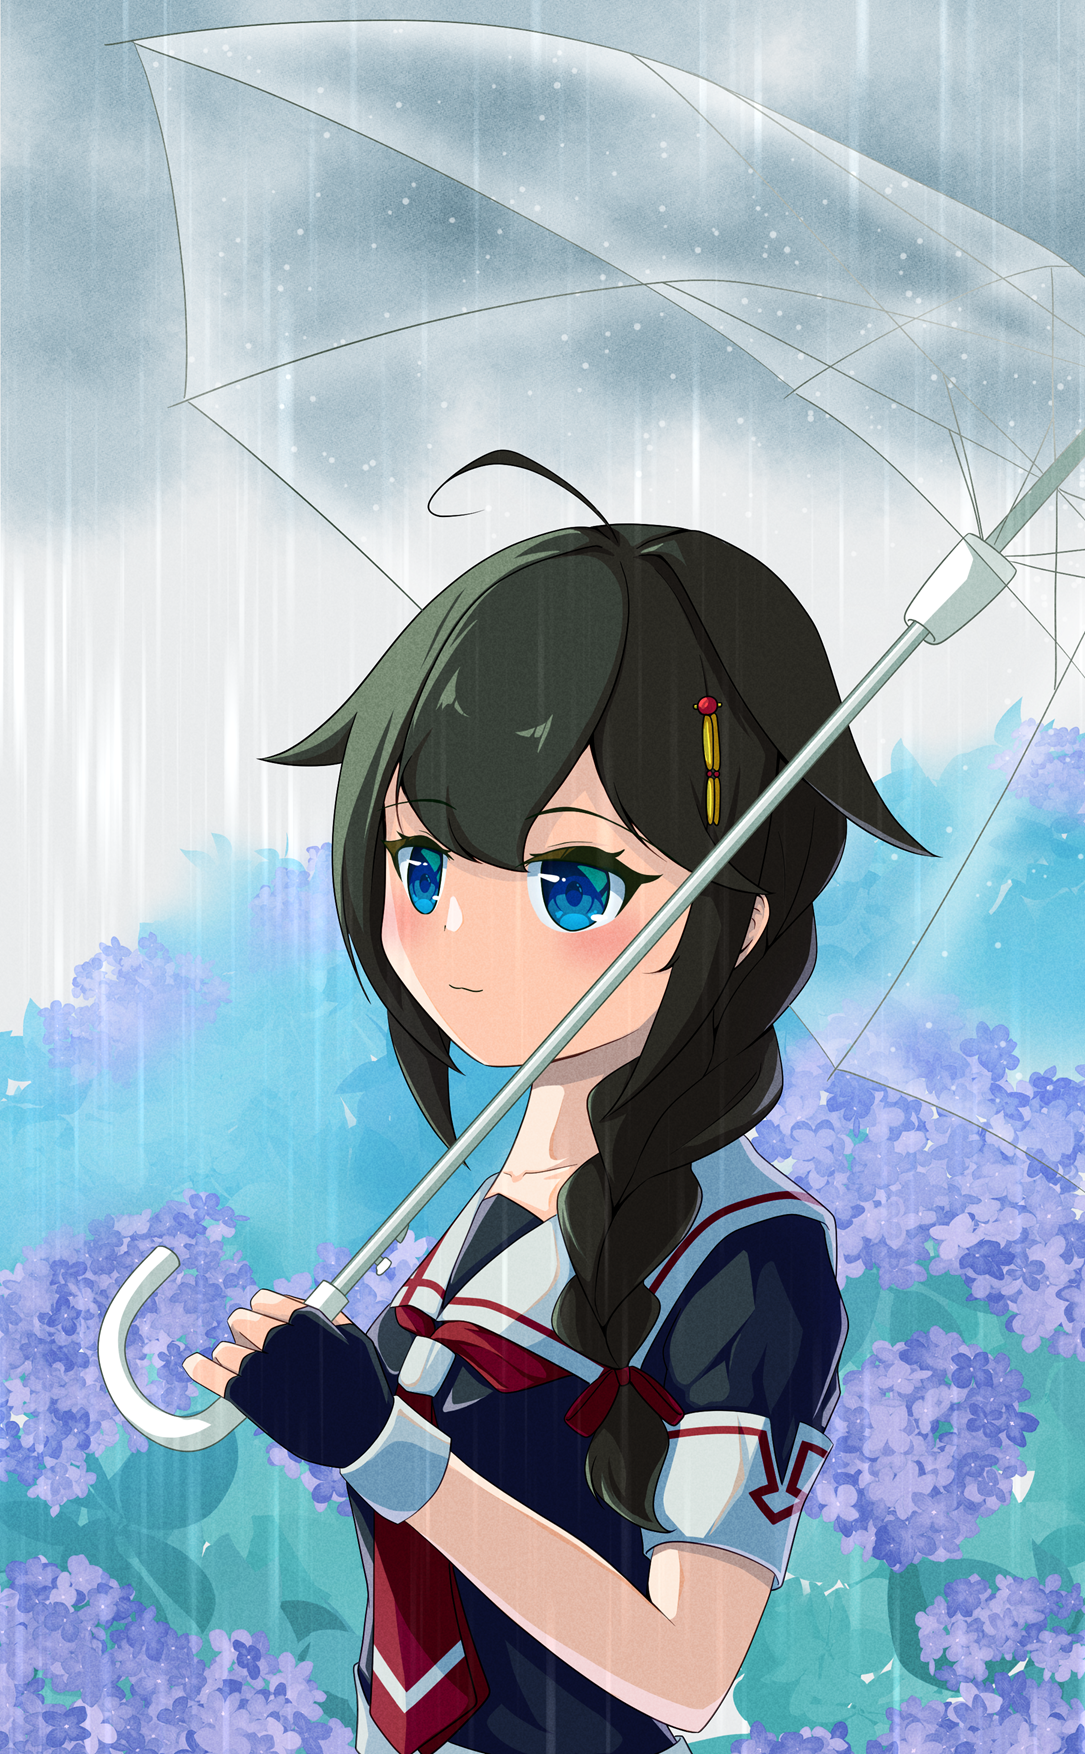 Anime 1085x1754 anime anime girls Kantai Collection Shigure (KanColle) shoulder length hair braids brunette artwork digital art fan art umbrella rain